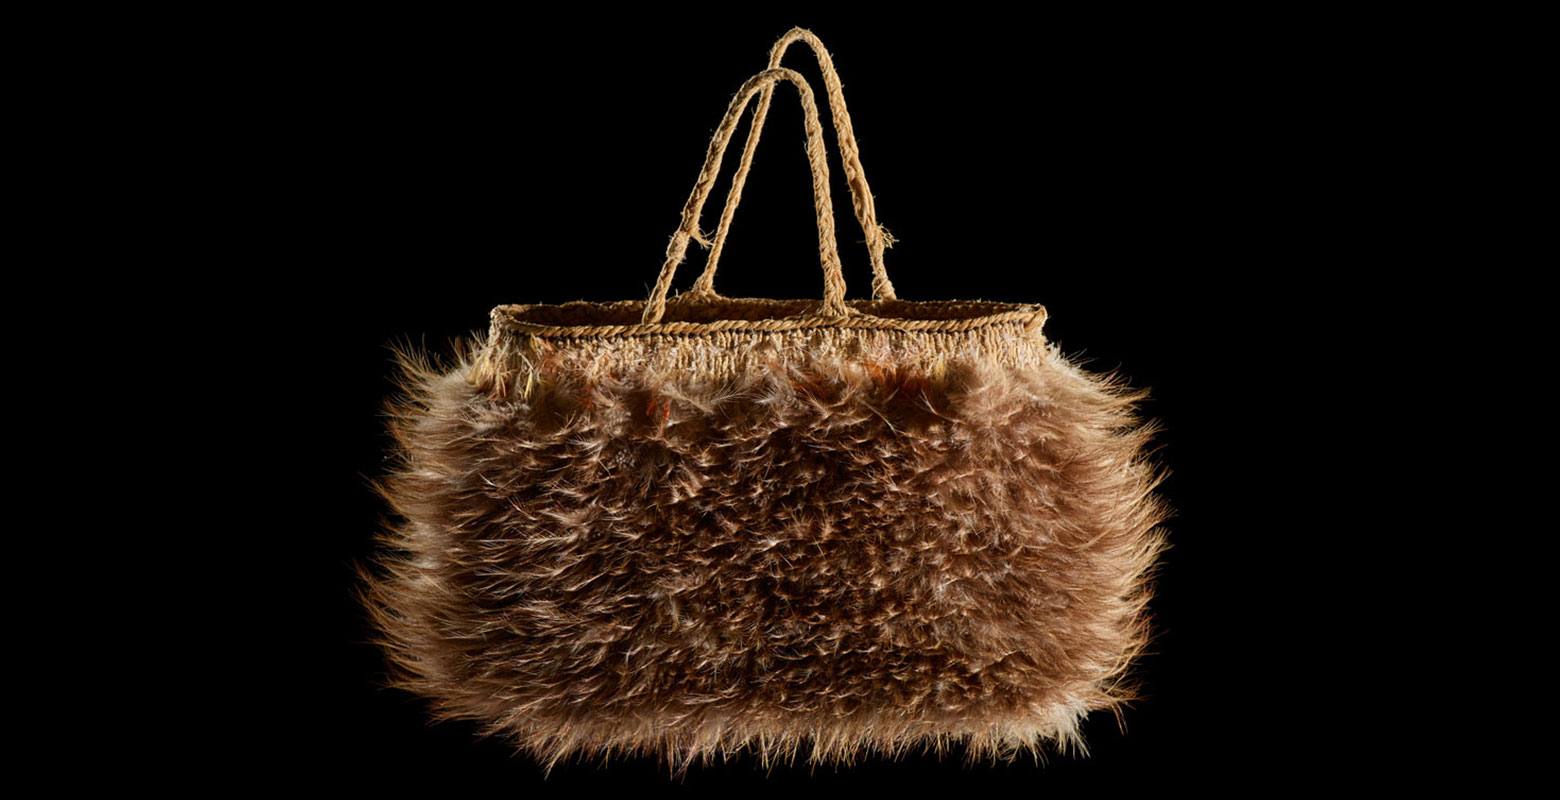 Bag made of kiwi feathers